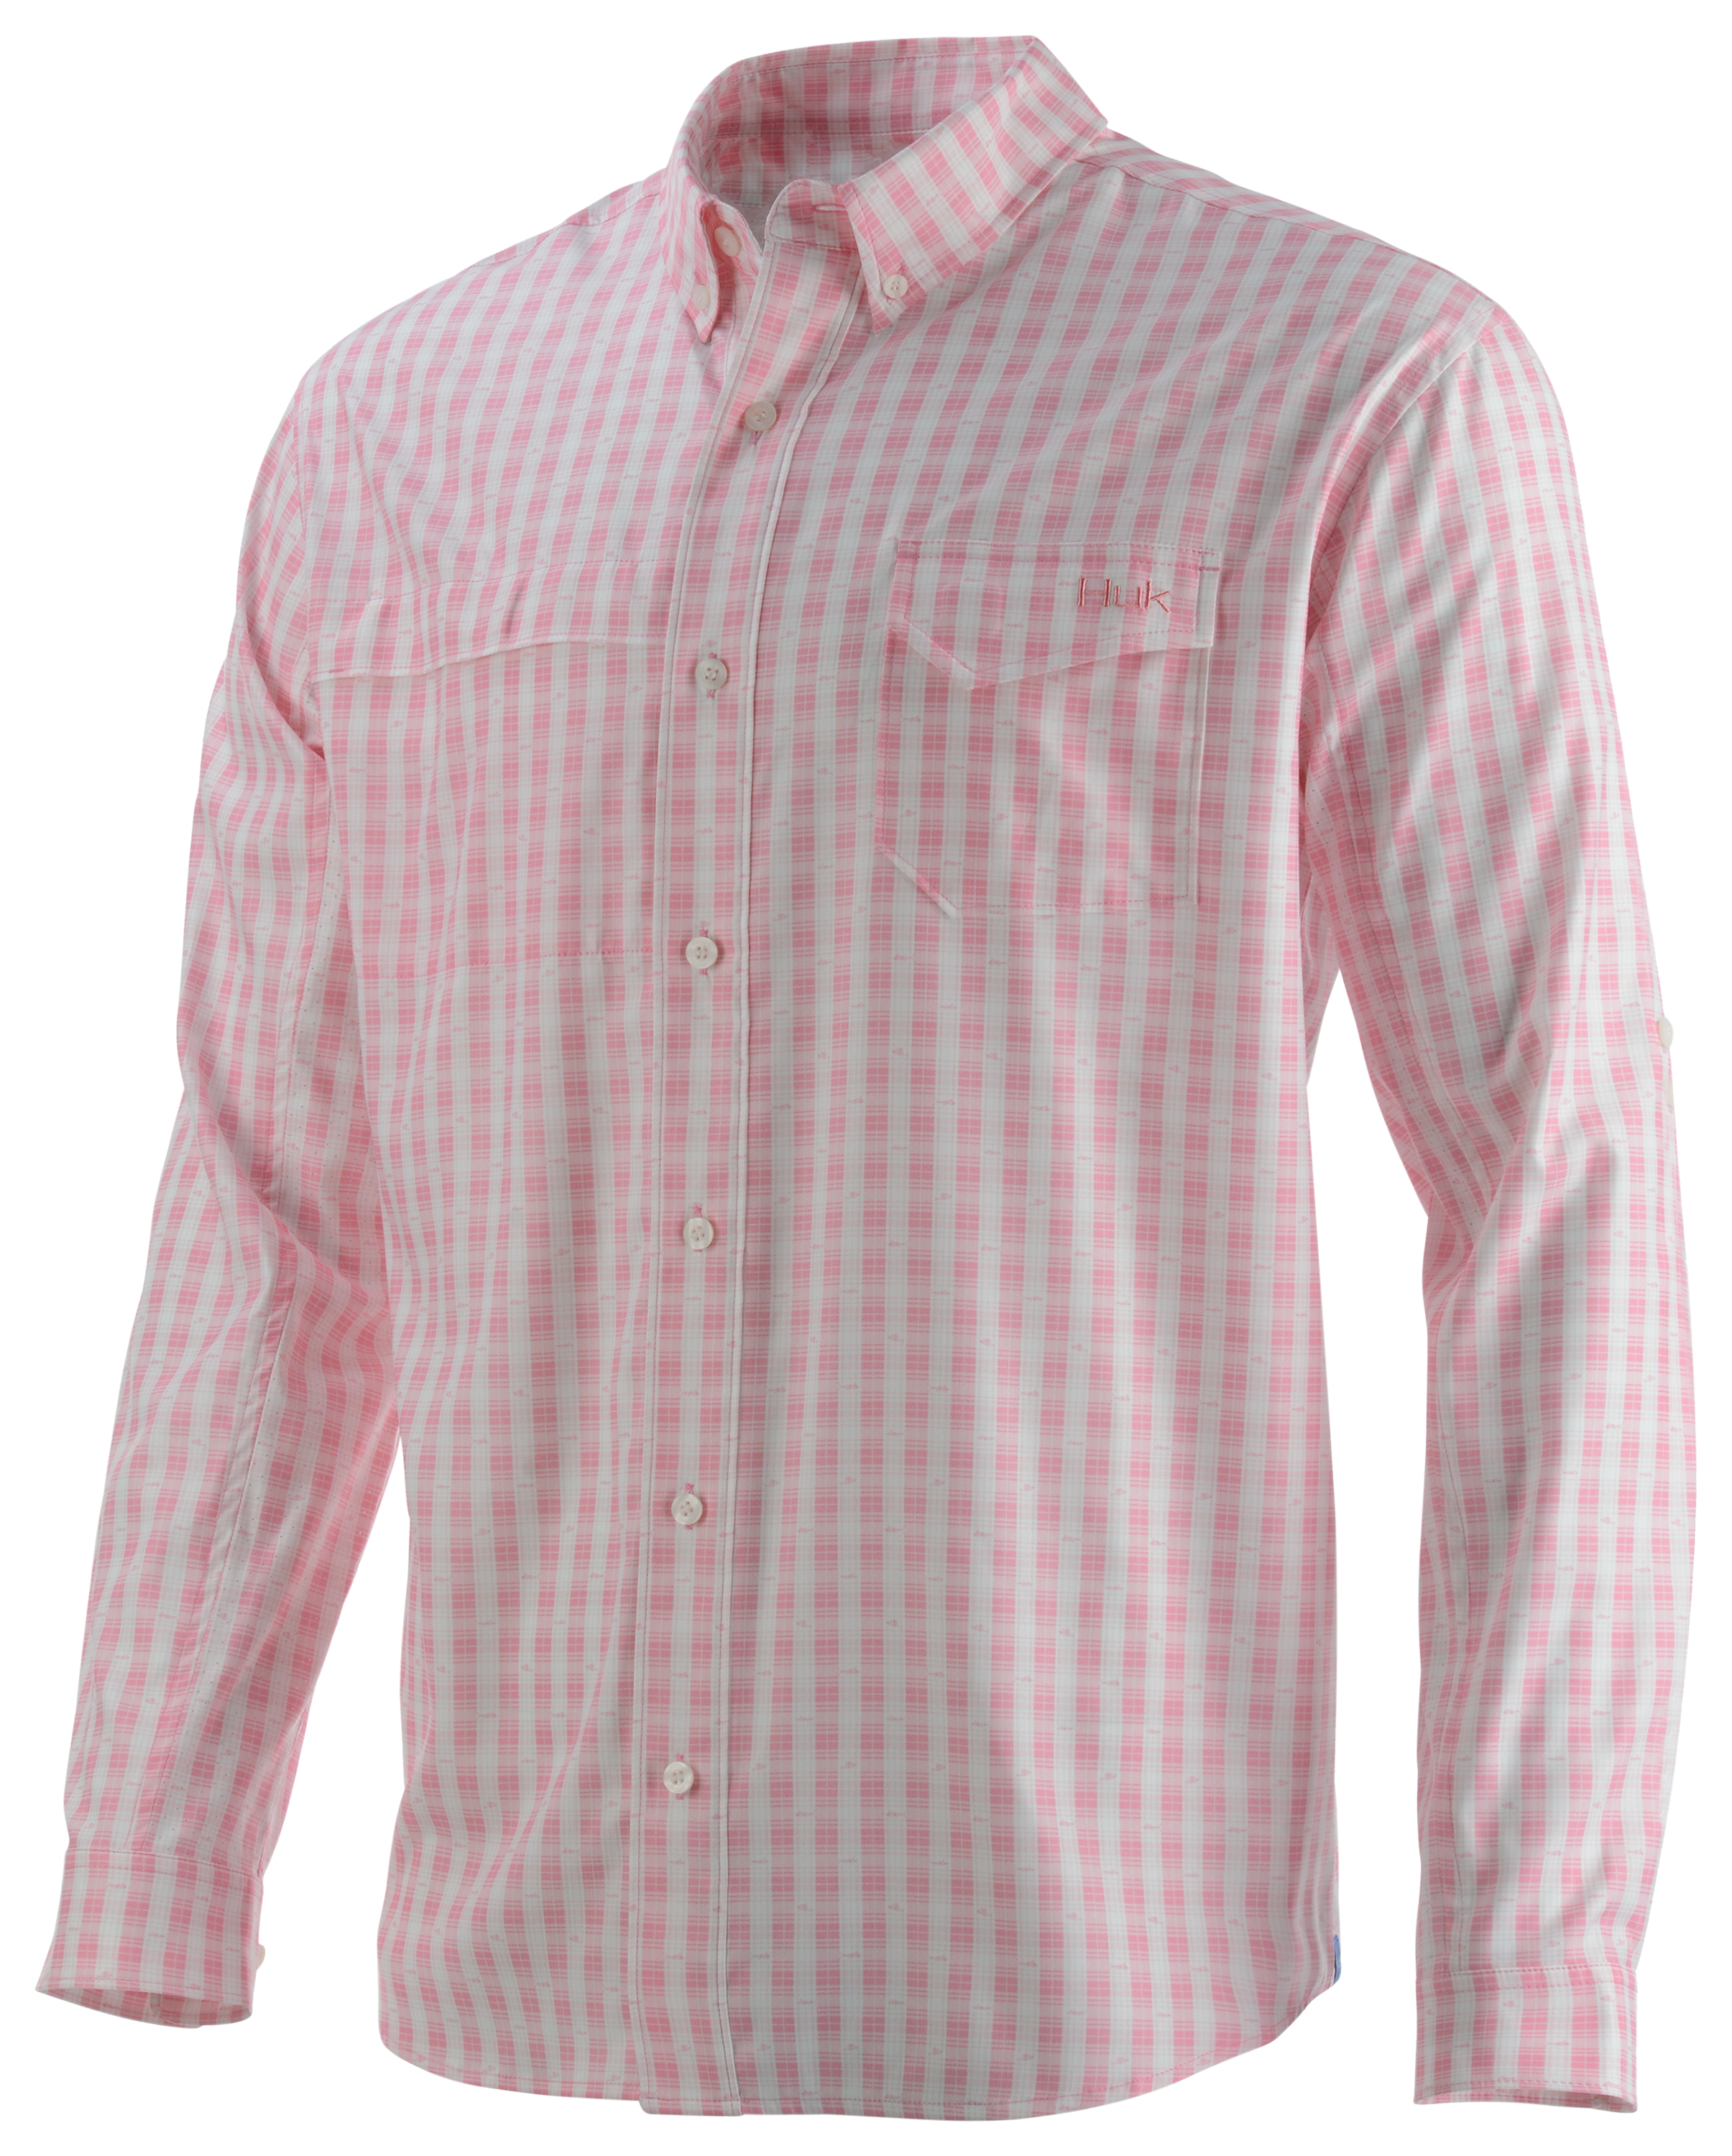 Huk Tide Point Woven Plaid Long-Sleeve Shirt for Men